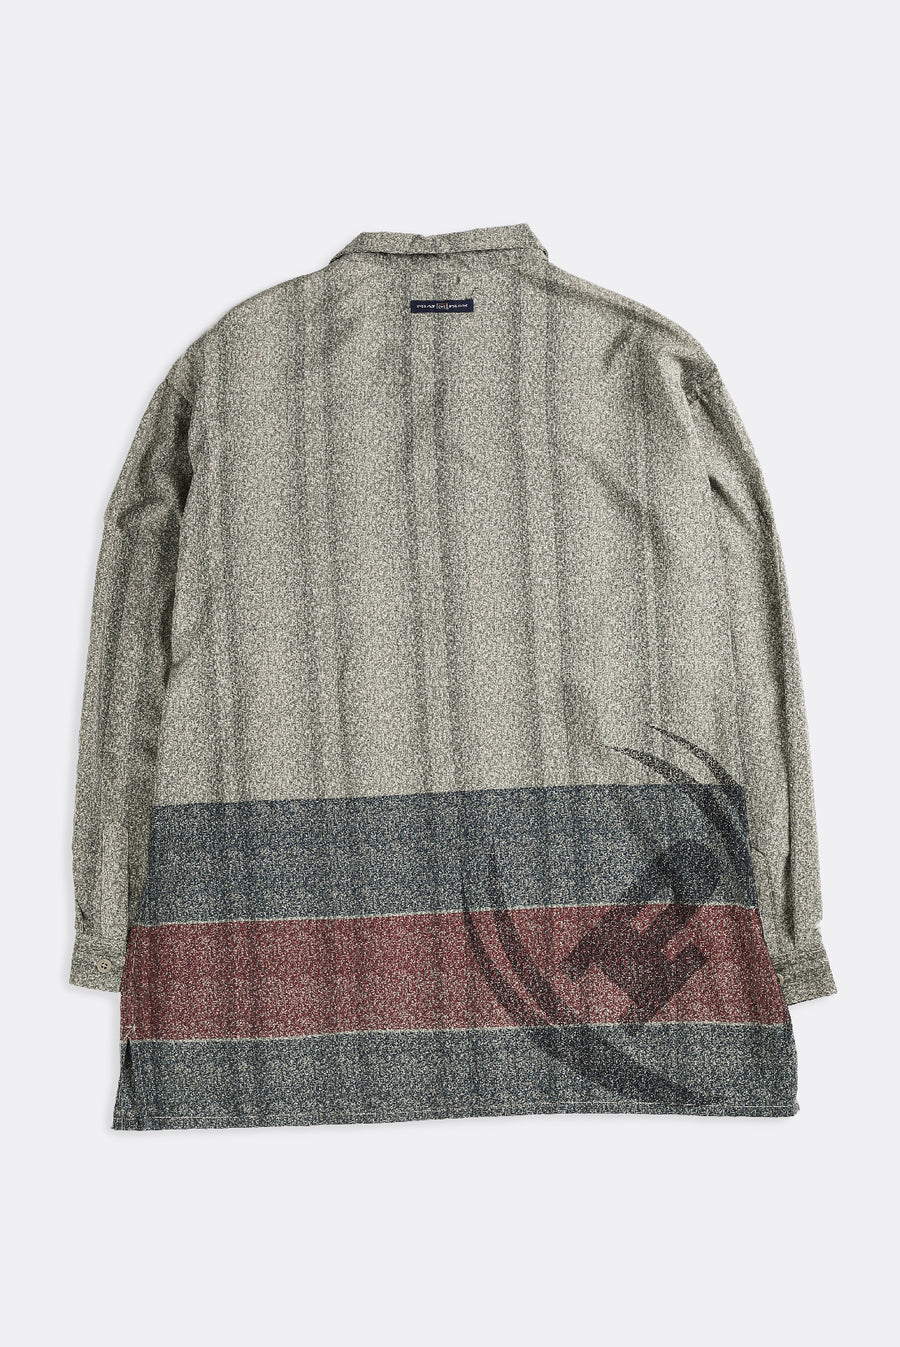 Deadstock Phat Farm Long Sleeve Collared Shirt - XL